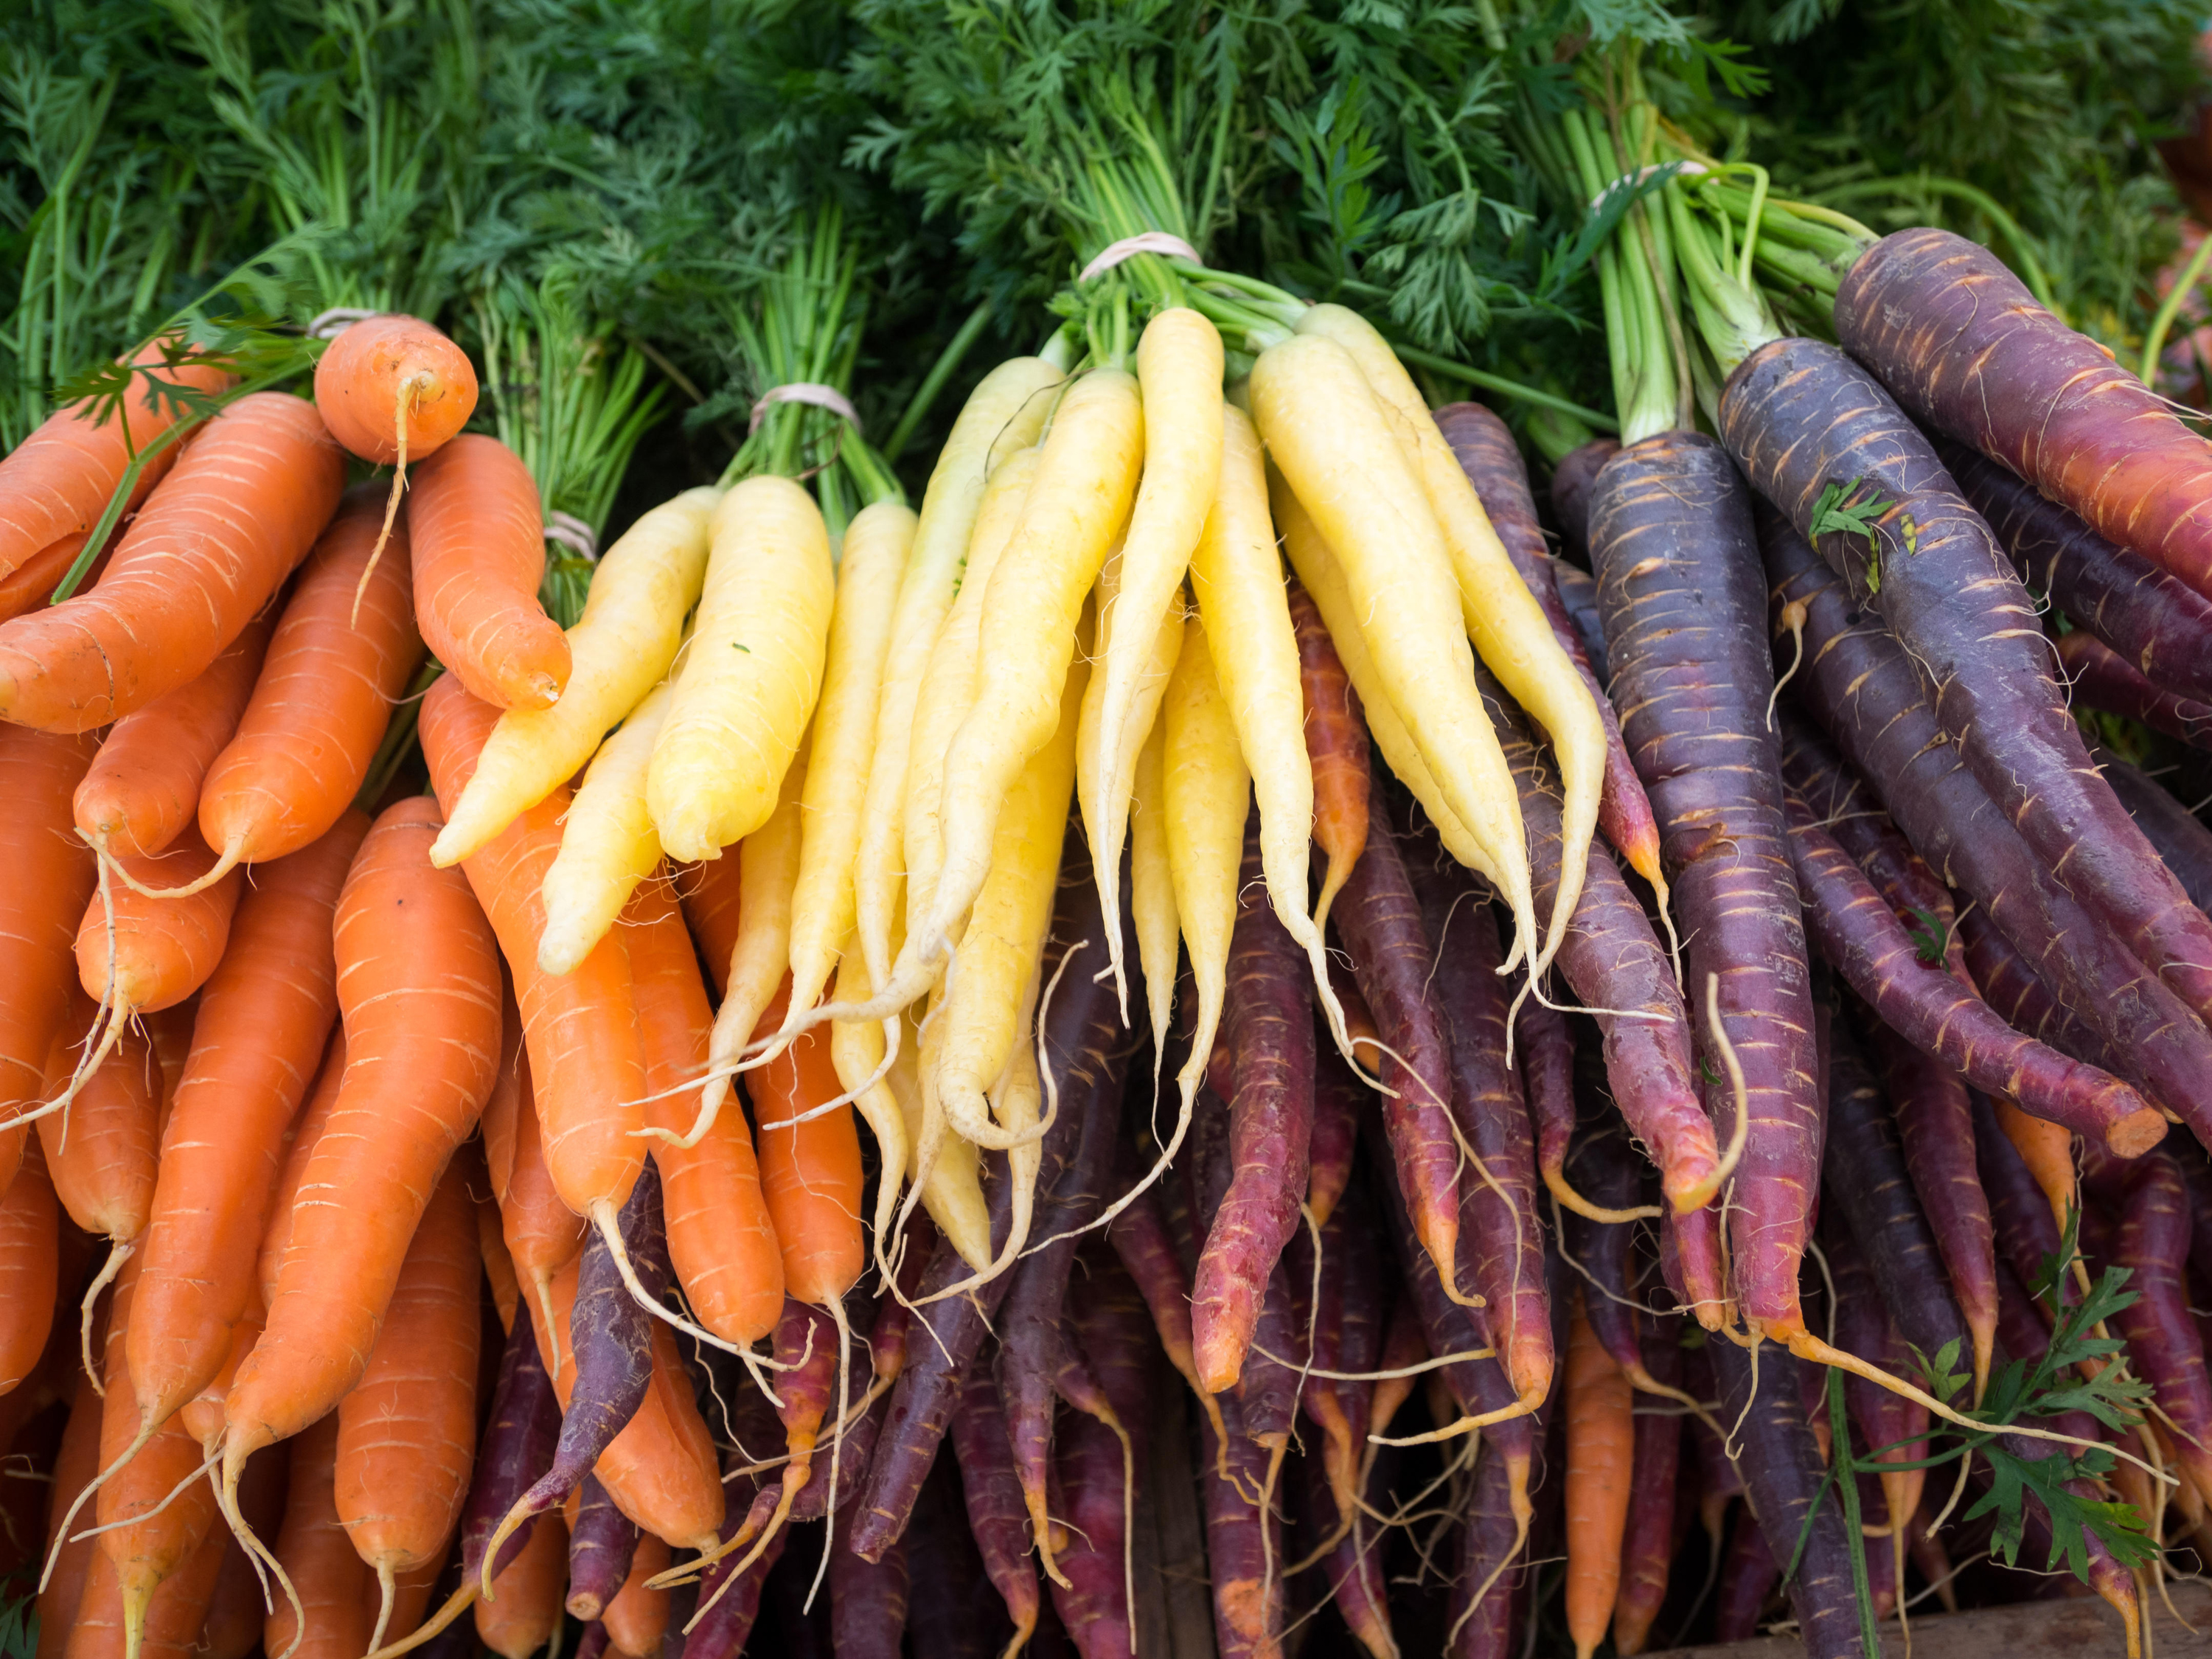 Orange, white and purple heirloom carrots